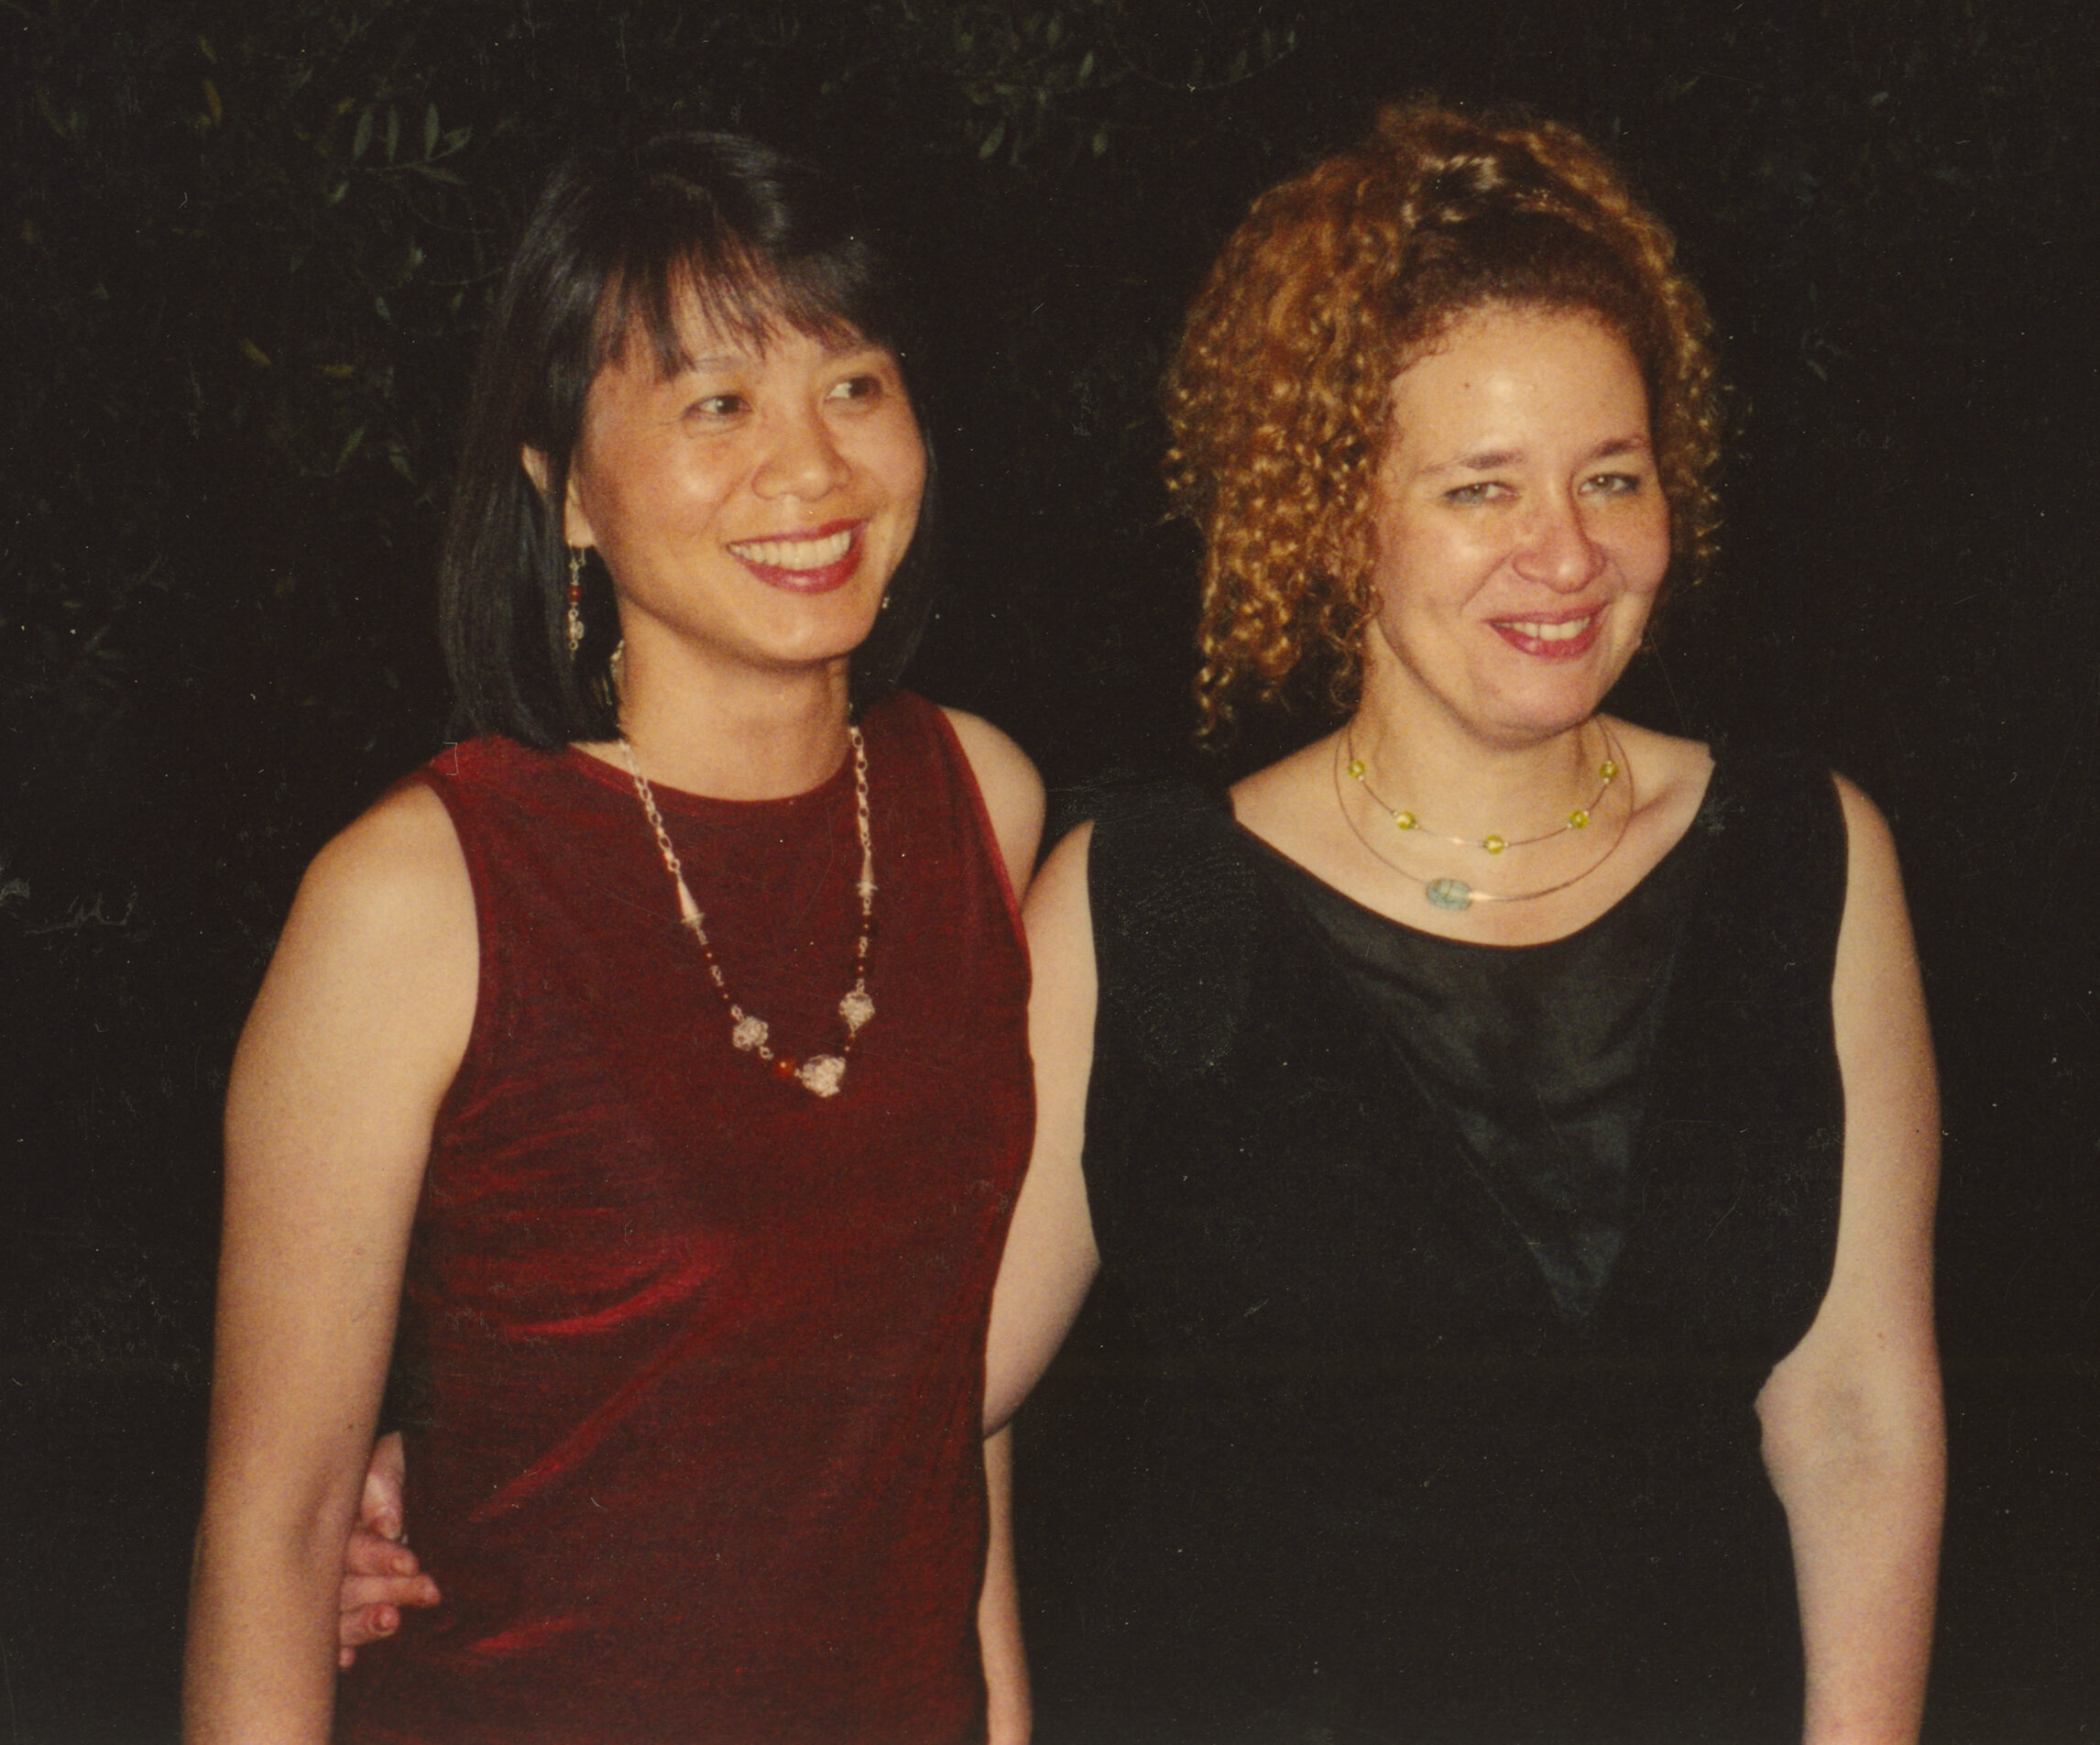 With Carolyn Yarnell, both were American Academy in Rome Fellows in 1999